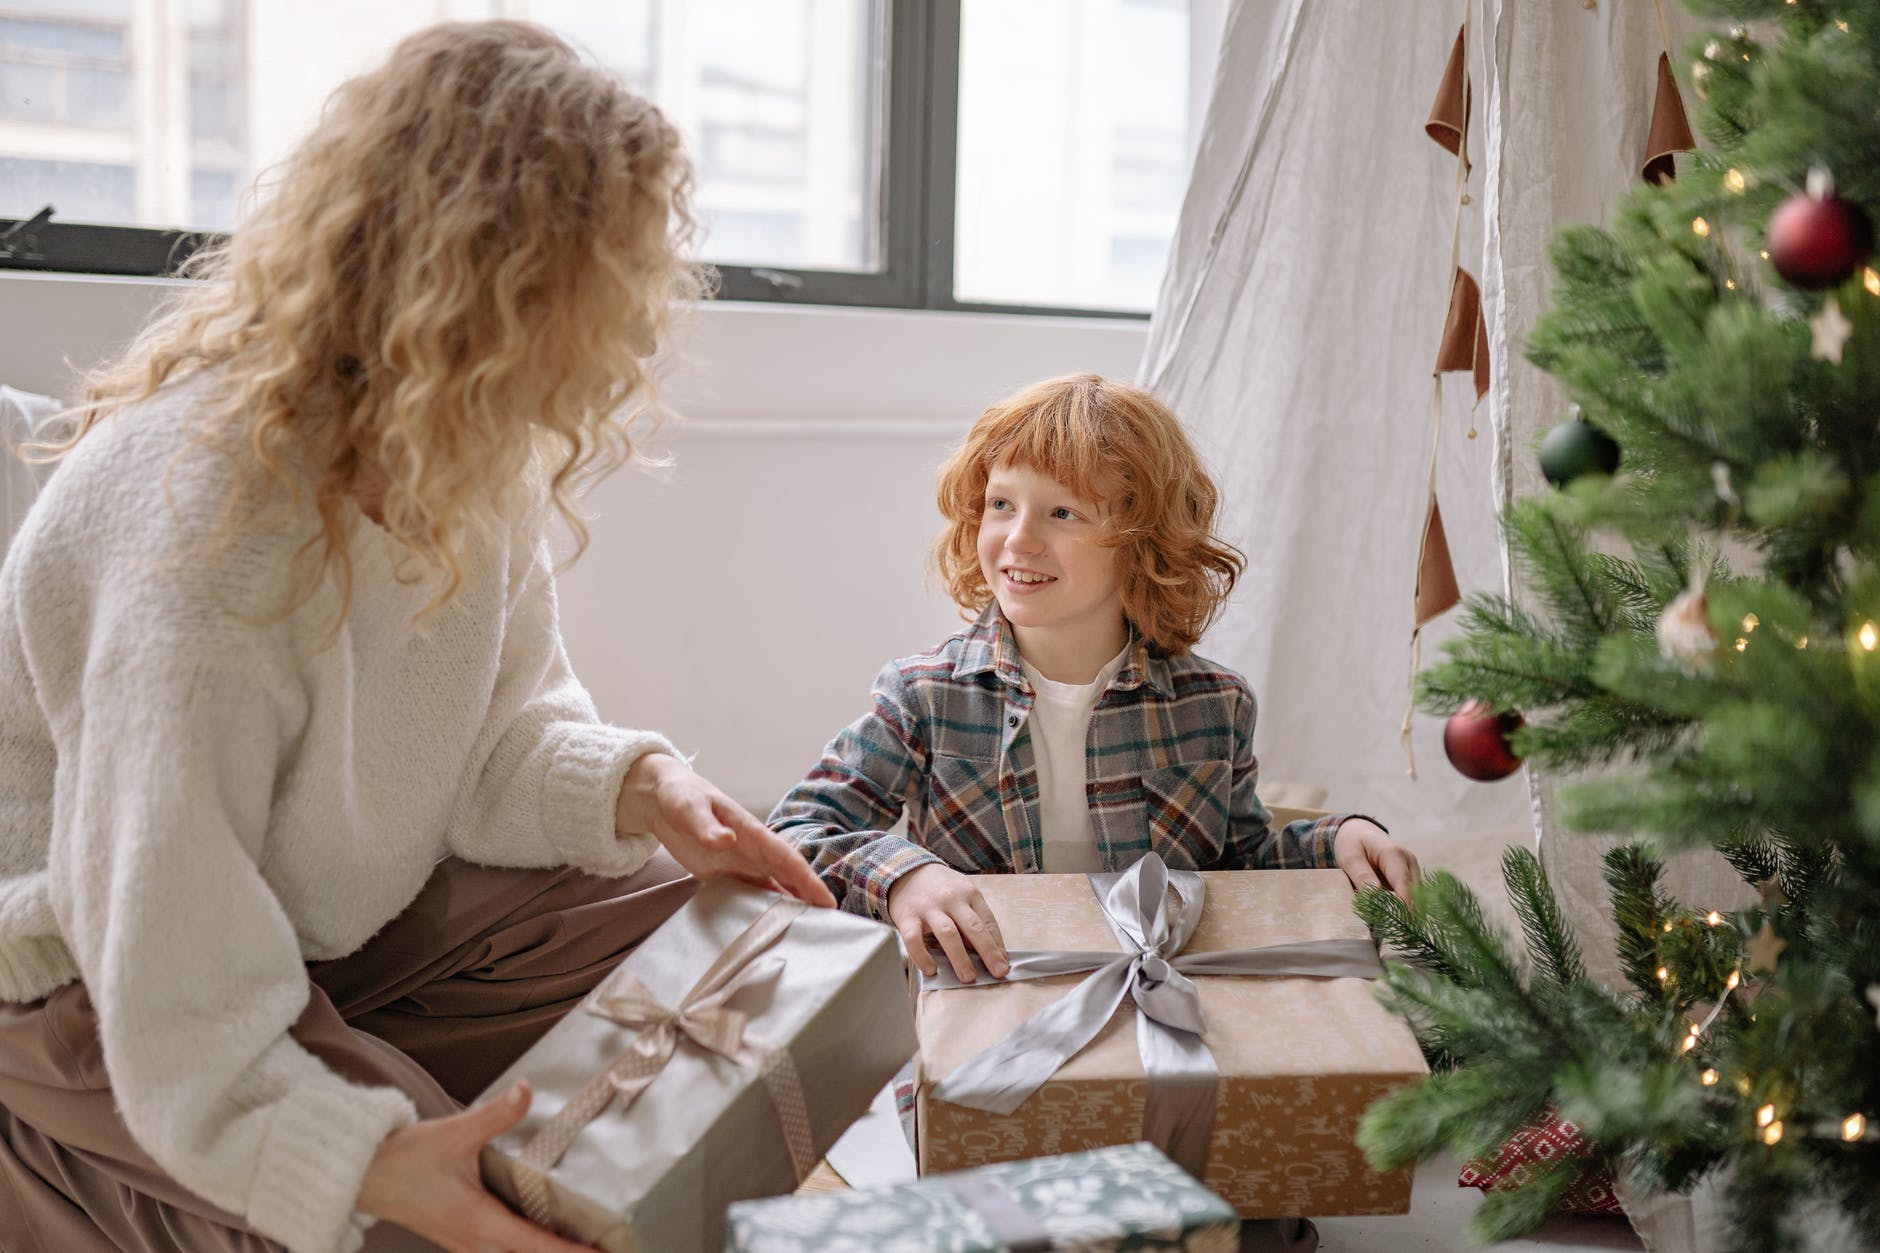 Gifting Experiences This Holiday Season